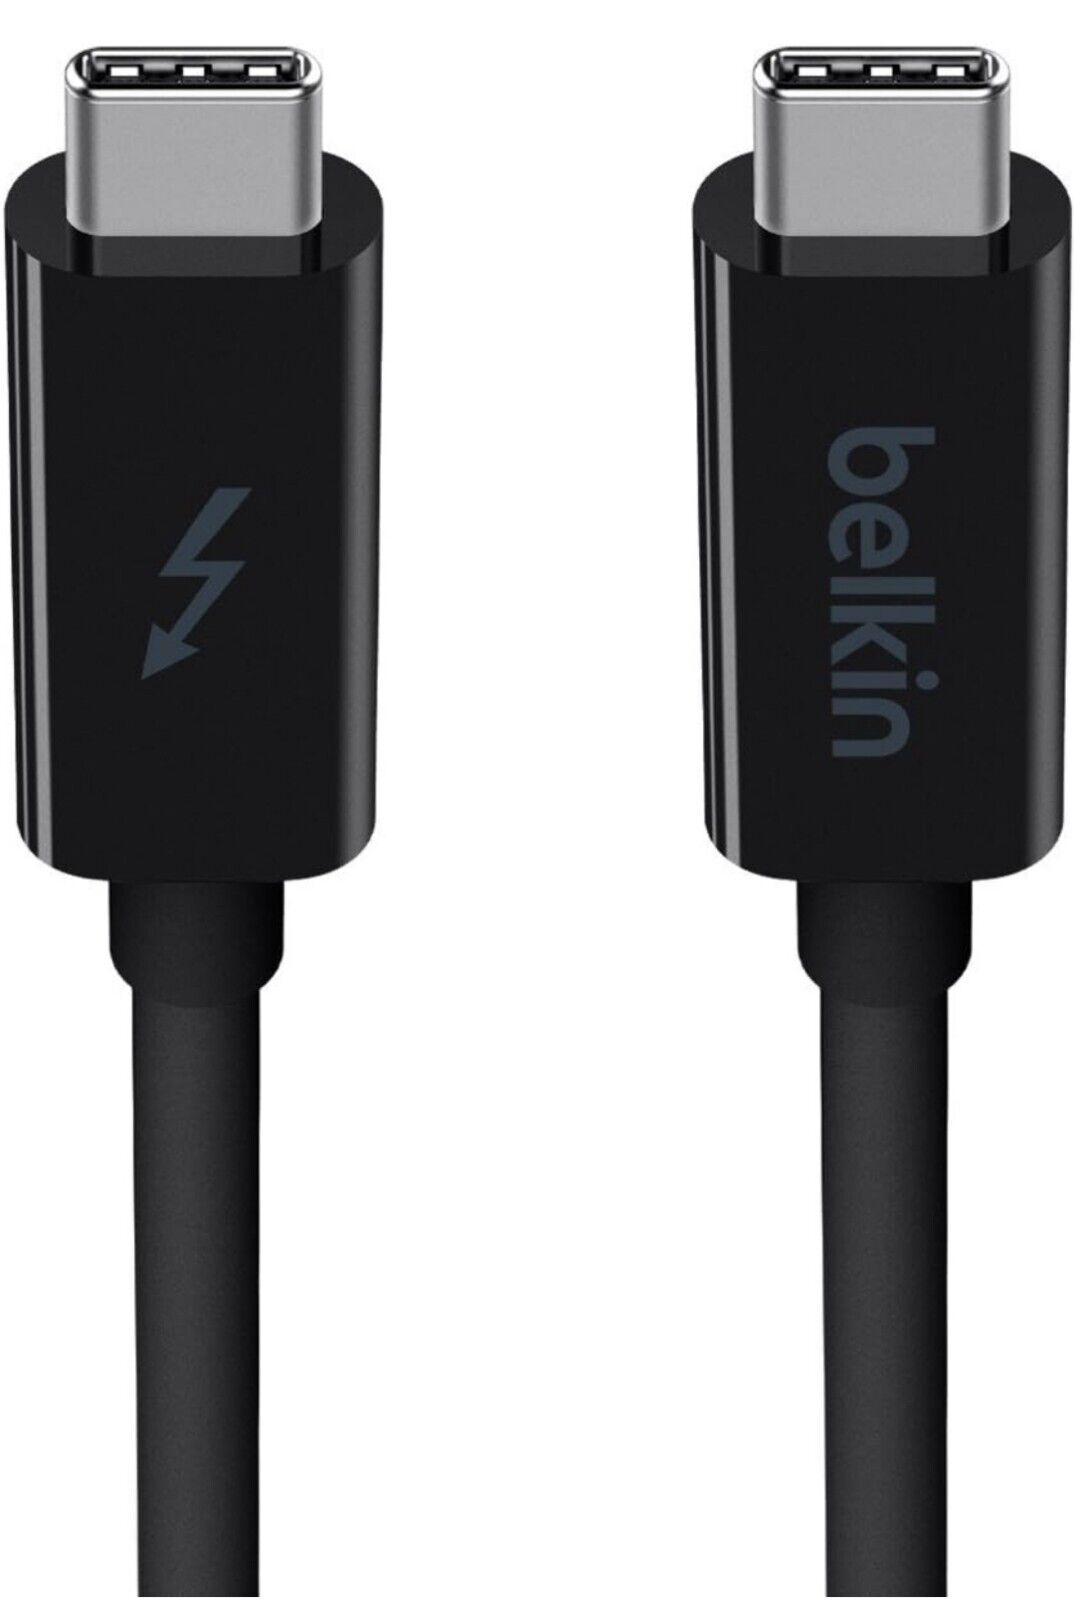 Belkin Thunderbolt 3 USB C to USB C 3.3ft/1M Long Data Transfer Power Cable